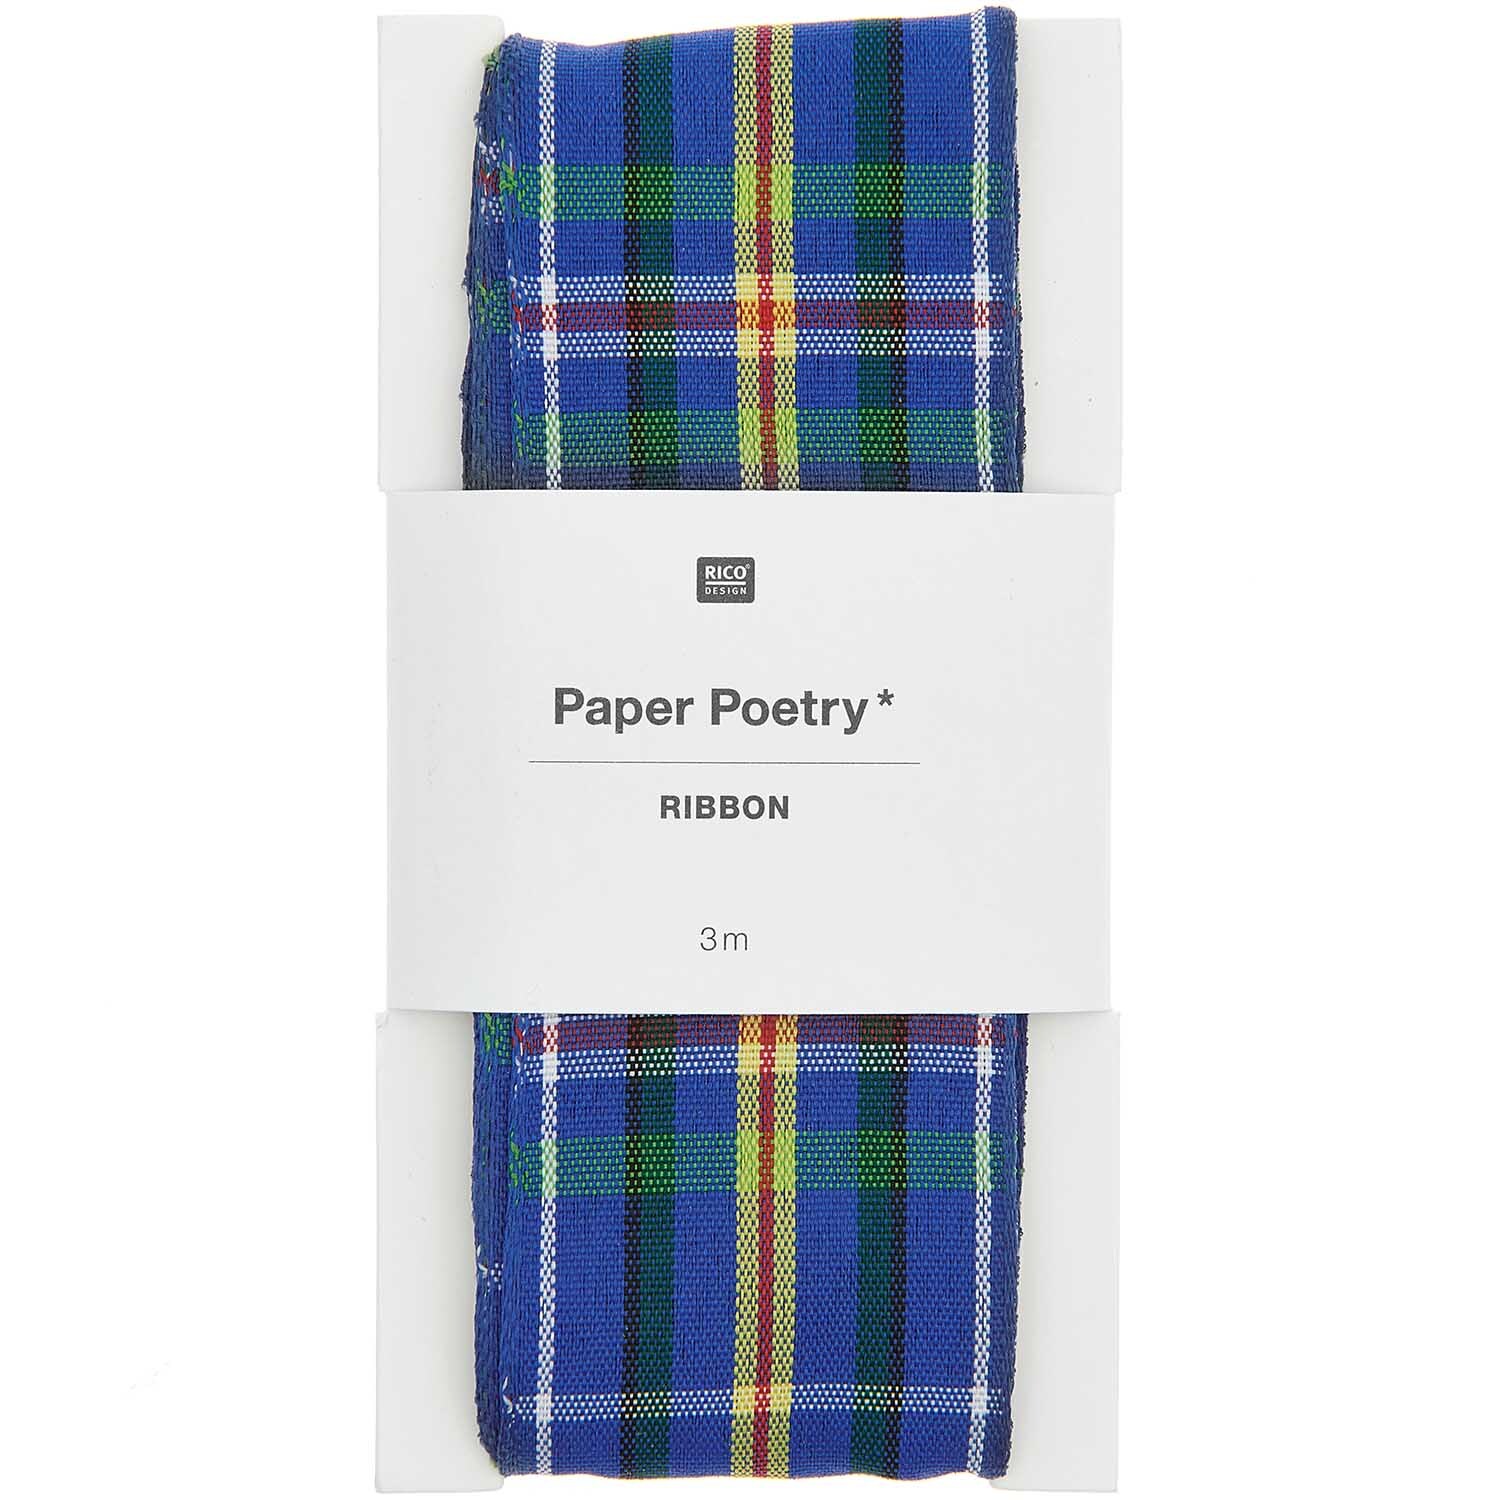 Paper Poetry Karoband blau-grün-gelb-rot 38mm 3m